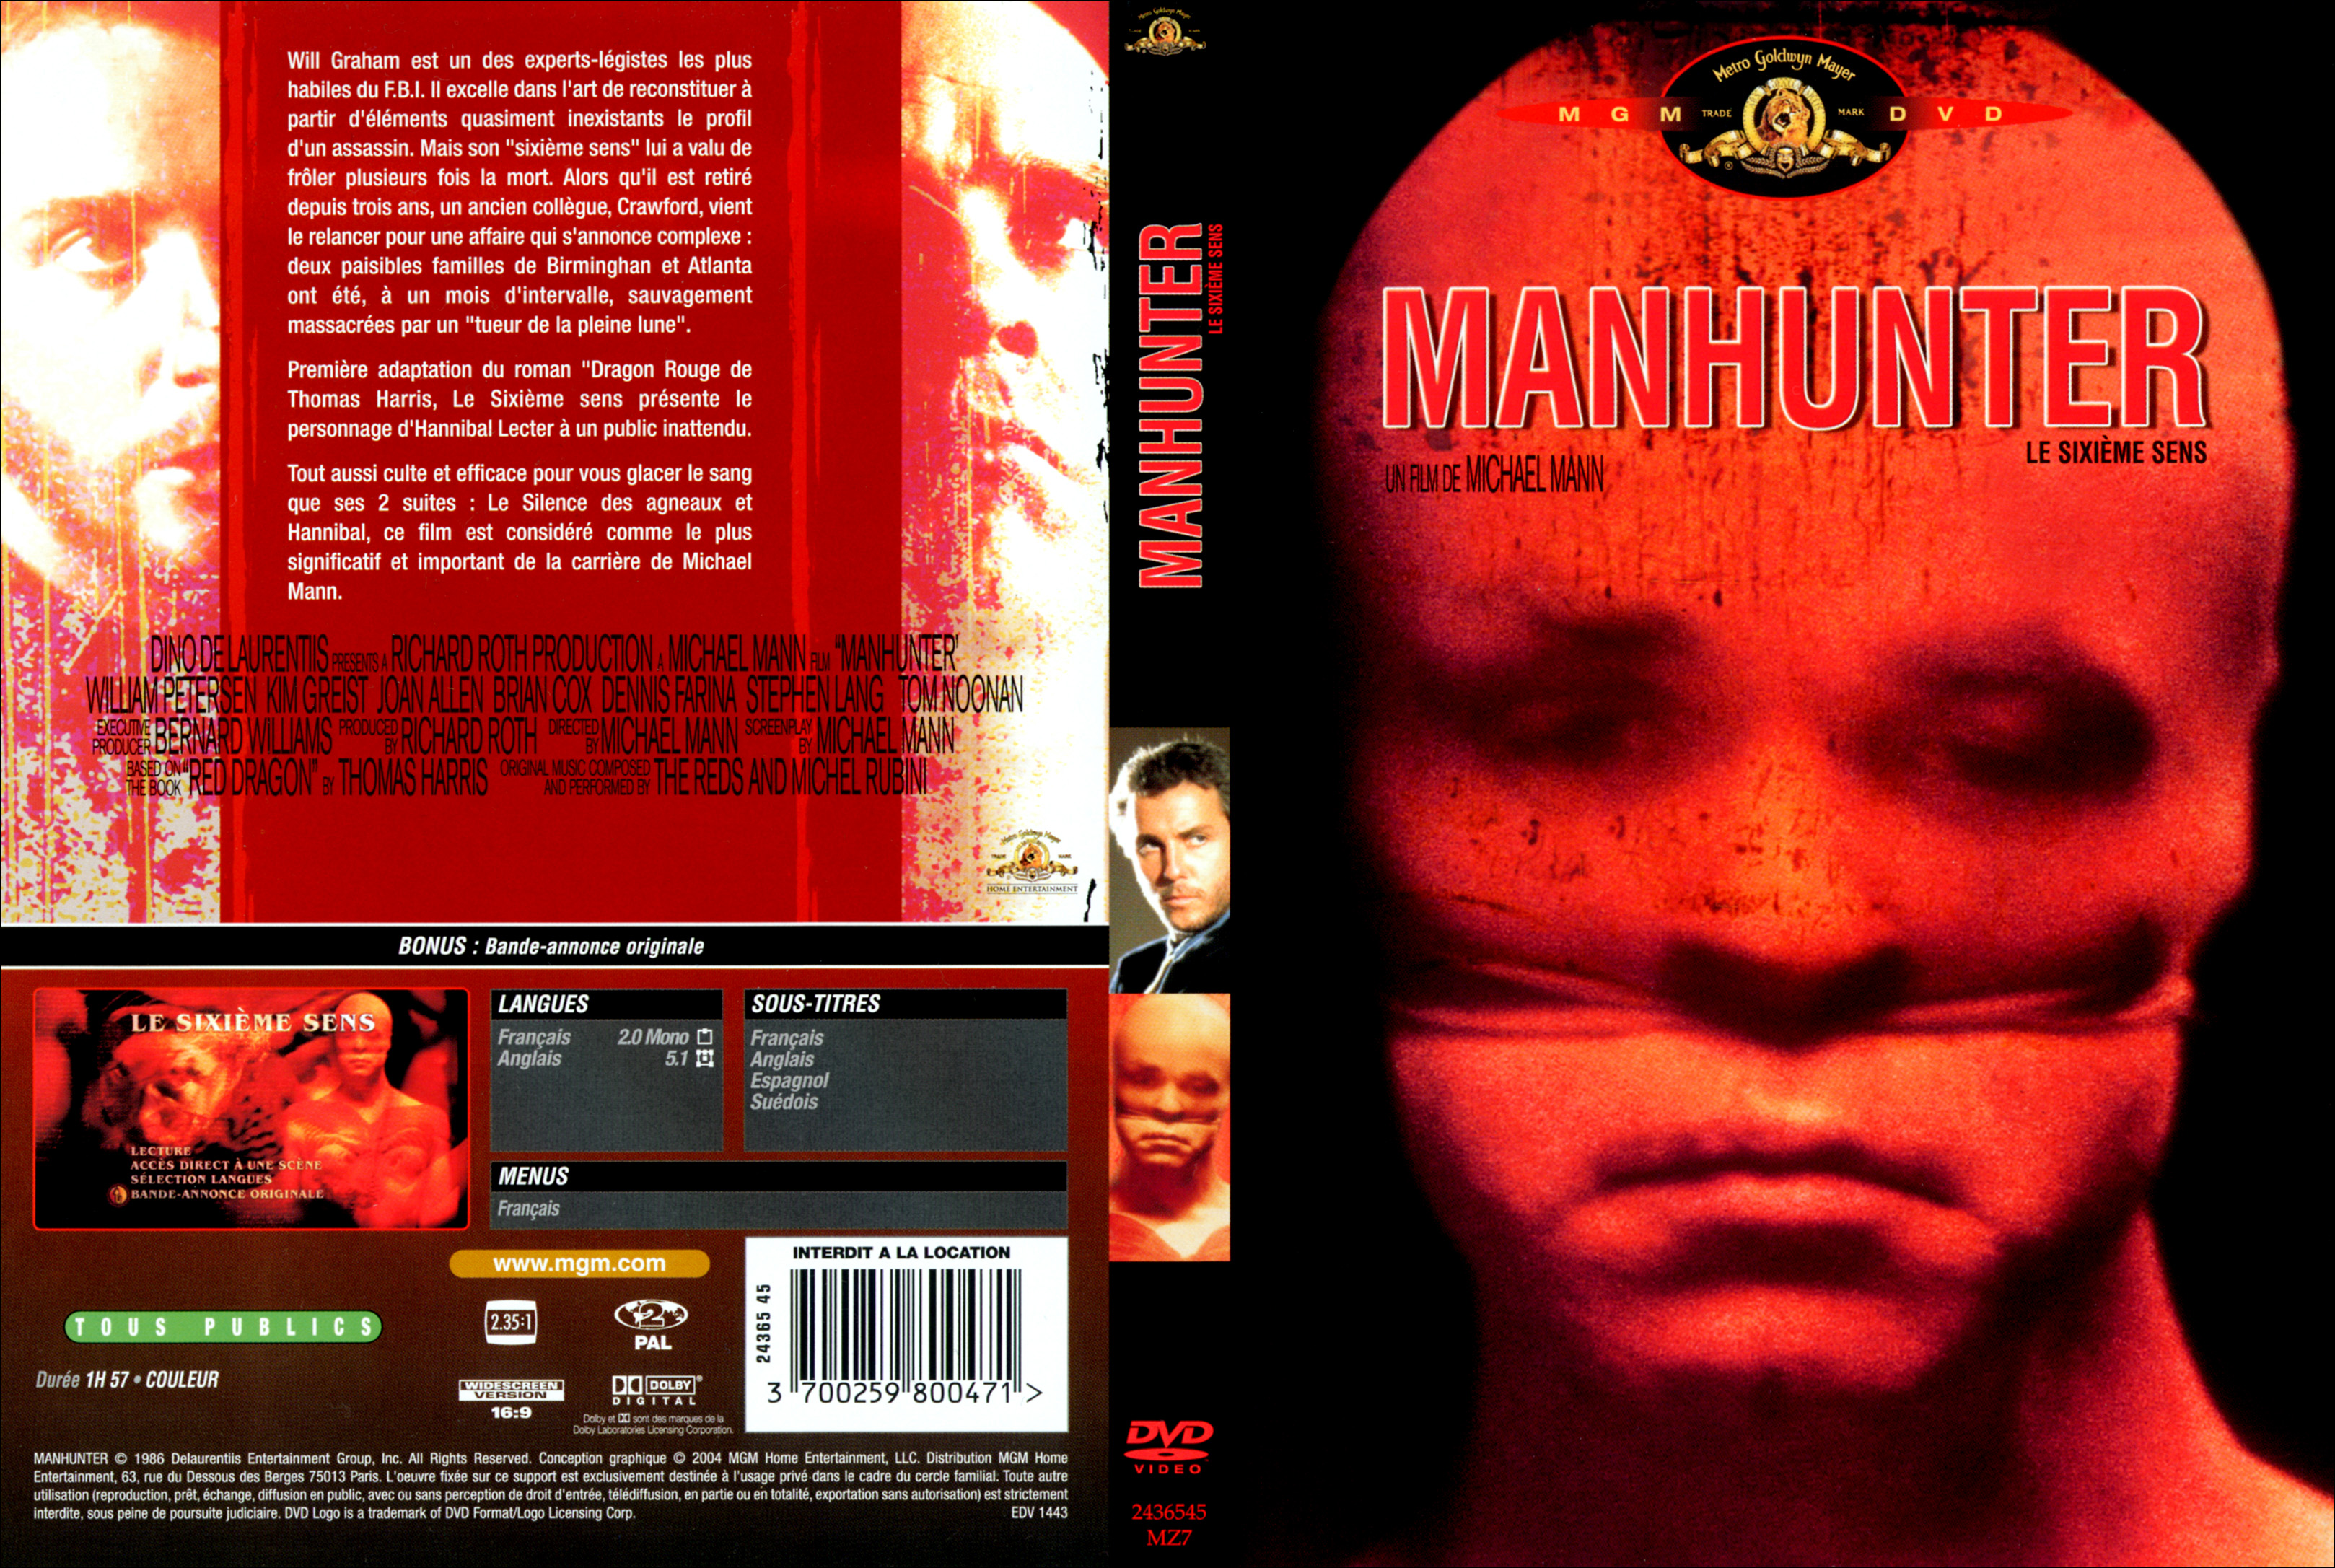 Manhunter Backgrounds, Compatible - PC, Mobile, Gadgets| 3236x2173 px